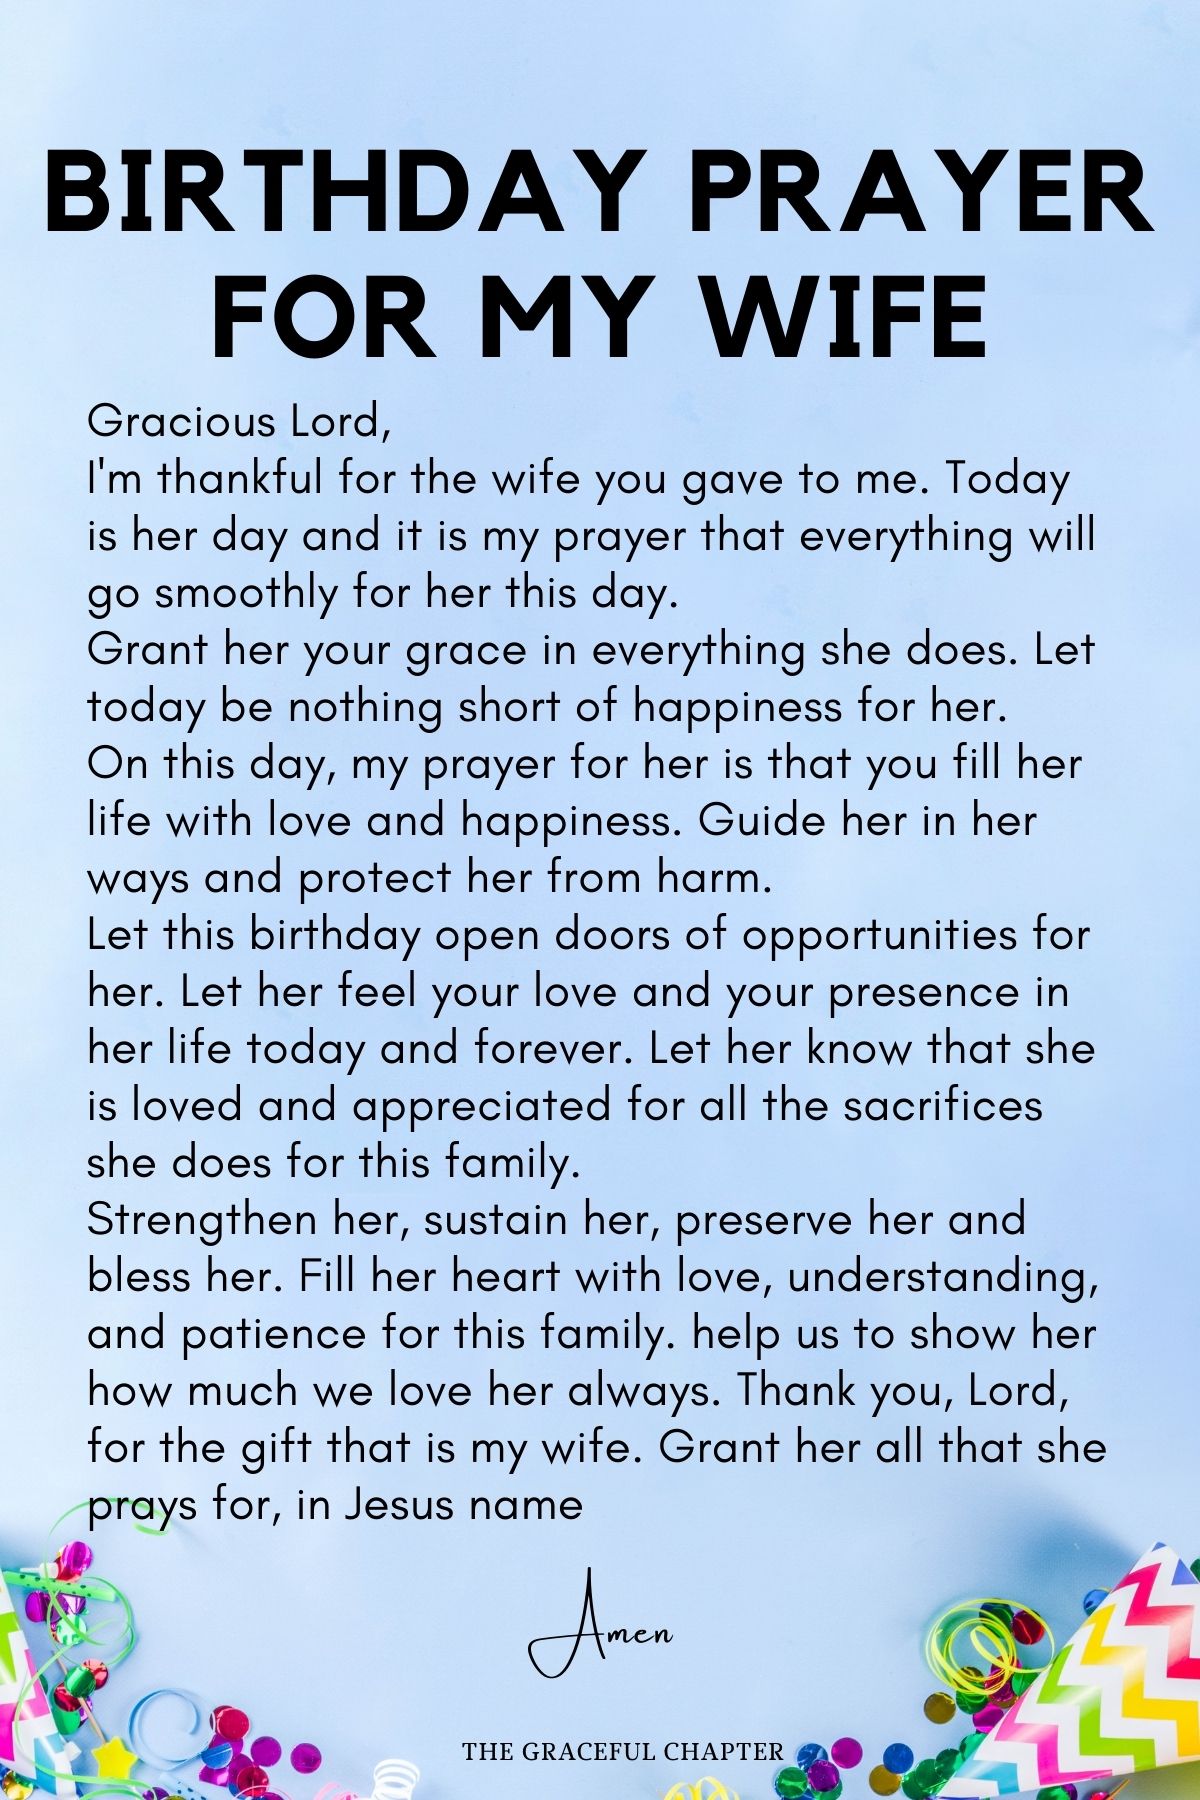 Birthday prayer for my wife